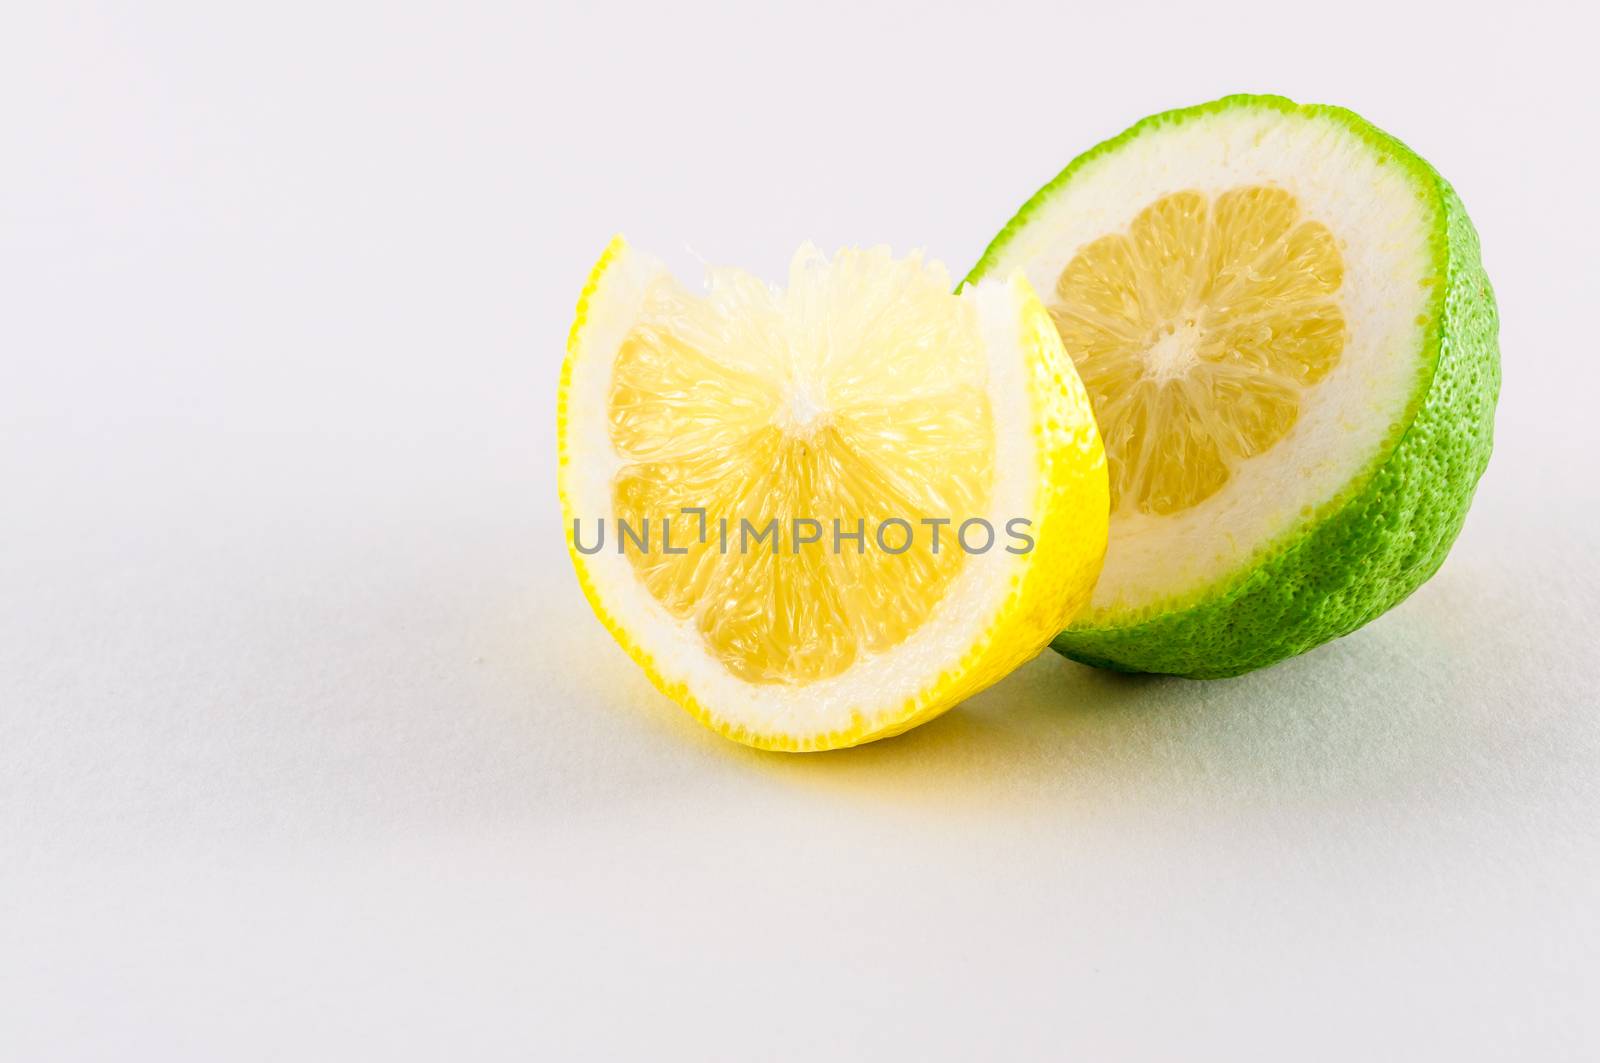 Slice of fresh lemons yellow and green on white background